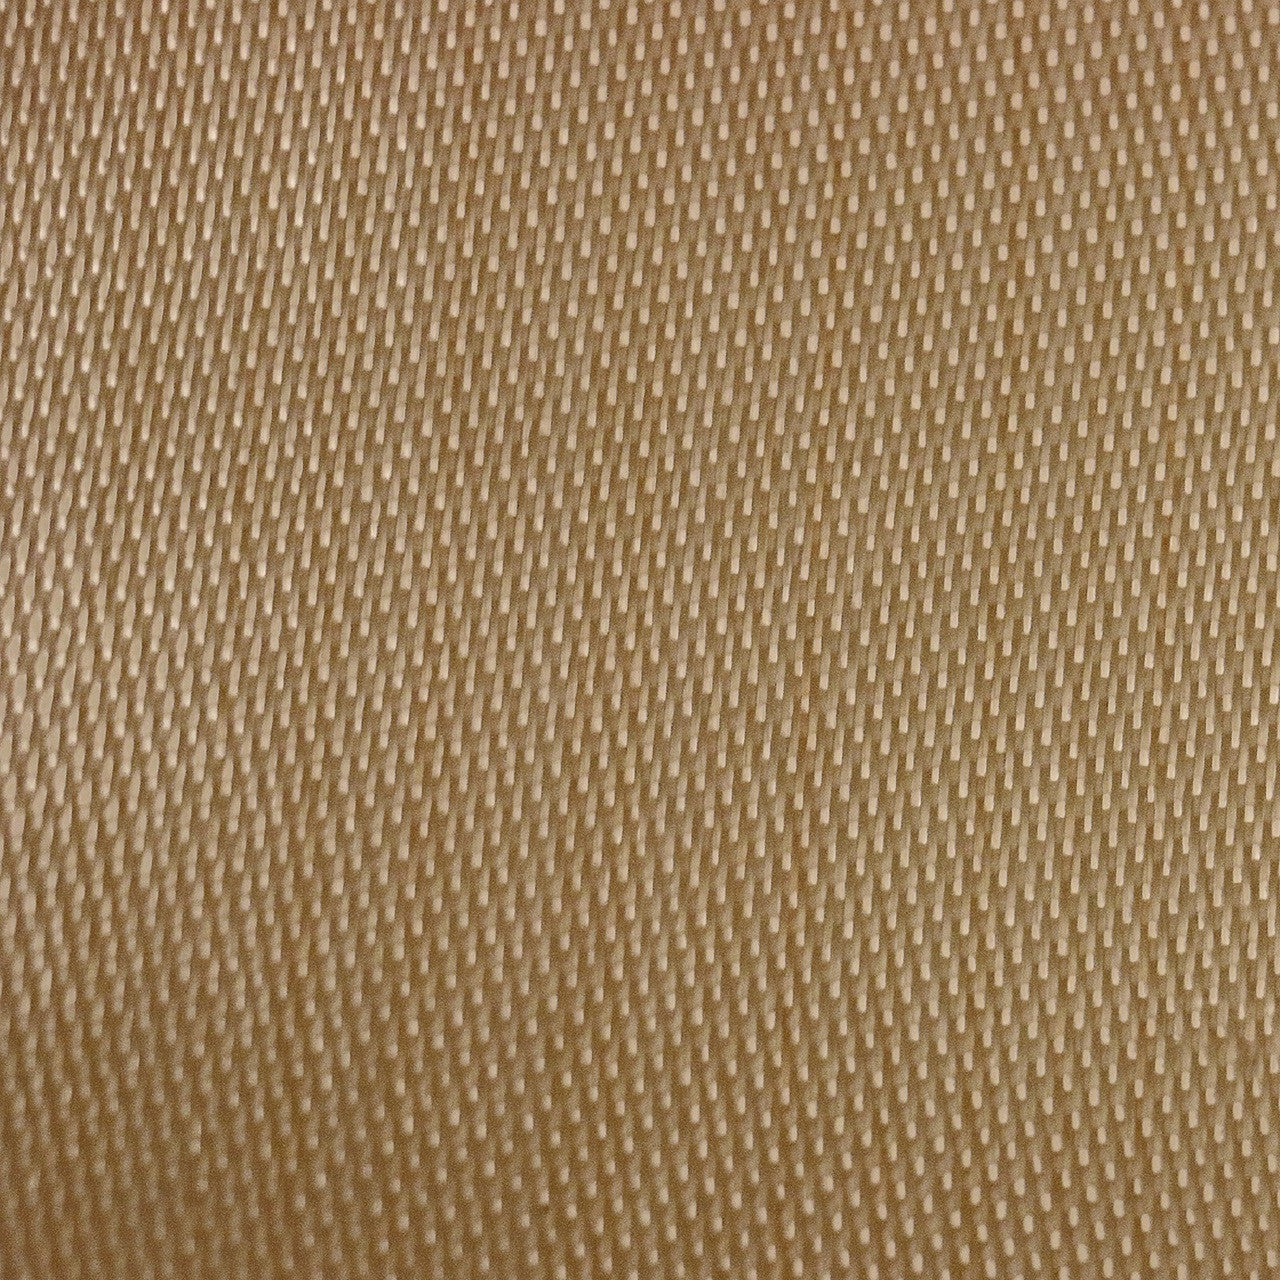 LOTOS WB016x8 Welding Blanket with Grommets 6’ x 8’ Fiberglass Heat Treated Gold Resists 1000°F - LOTOS Plasma Cutters & Welders